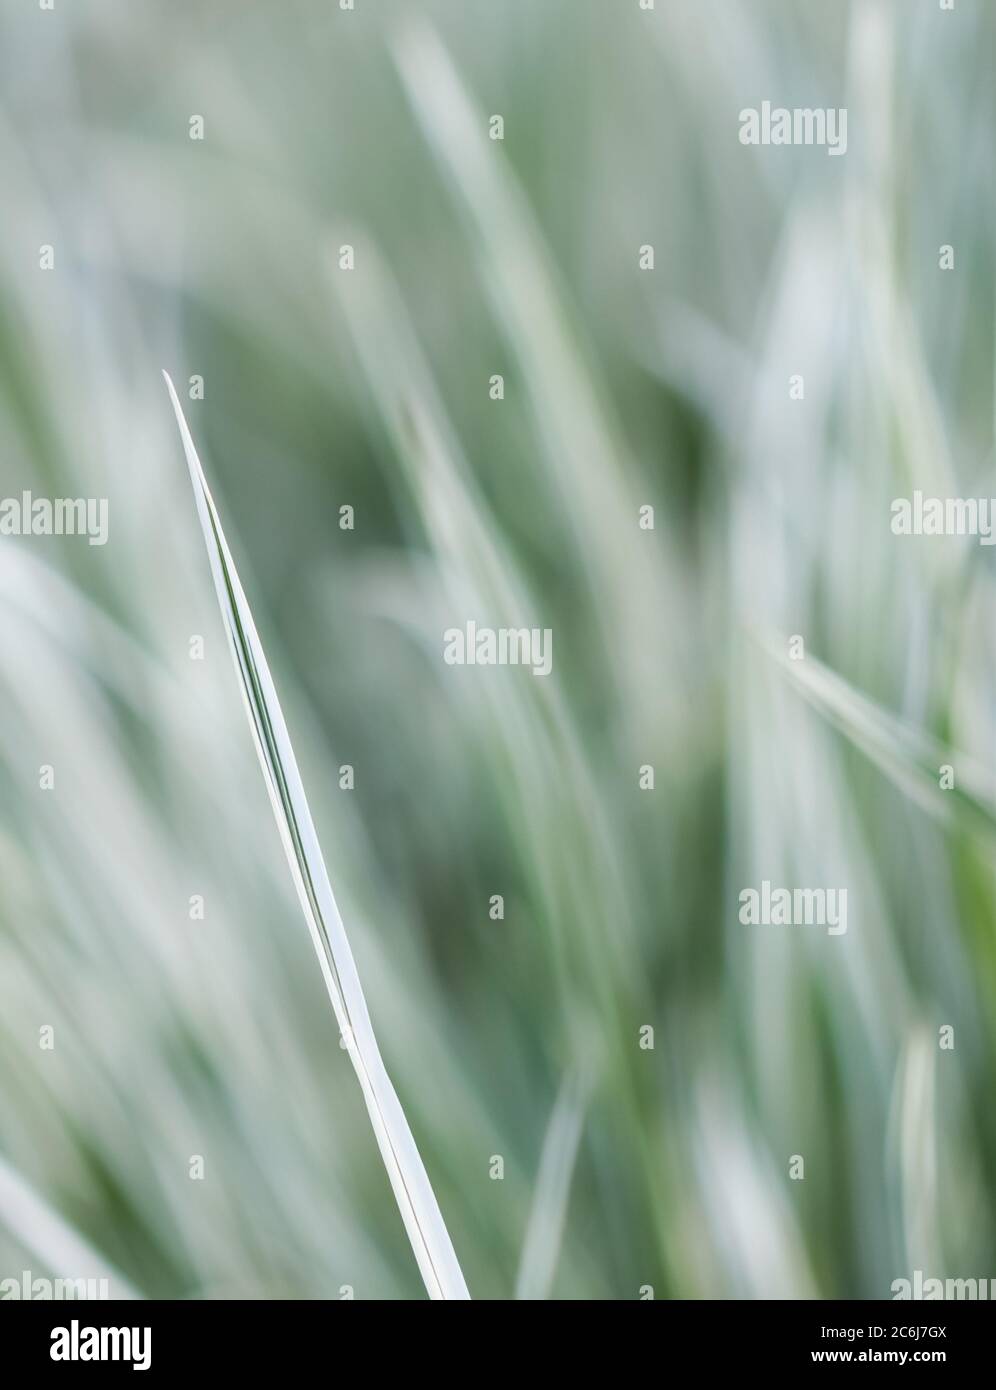 Decorative green and white striped grass.  Arrhenatherum elatius bulbosum variegatum. Soft focus. Natural background. Stock Photo